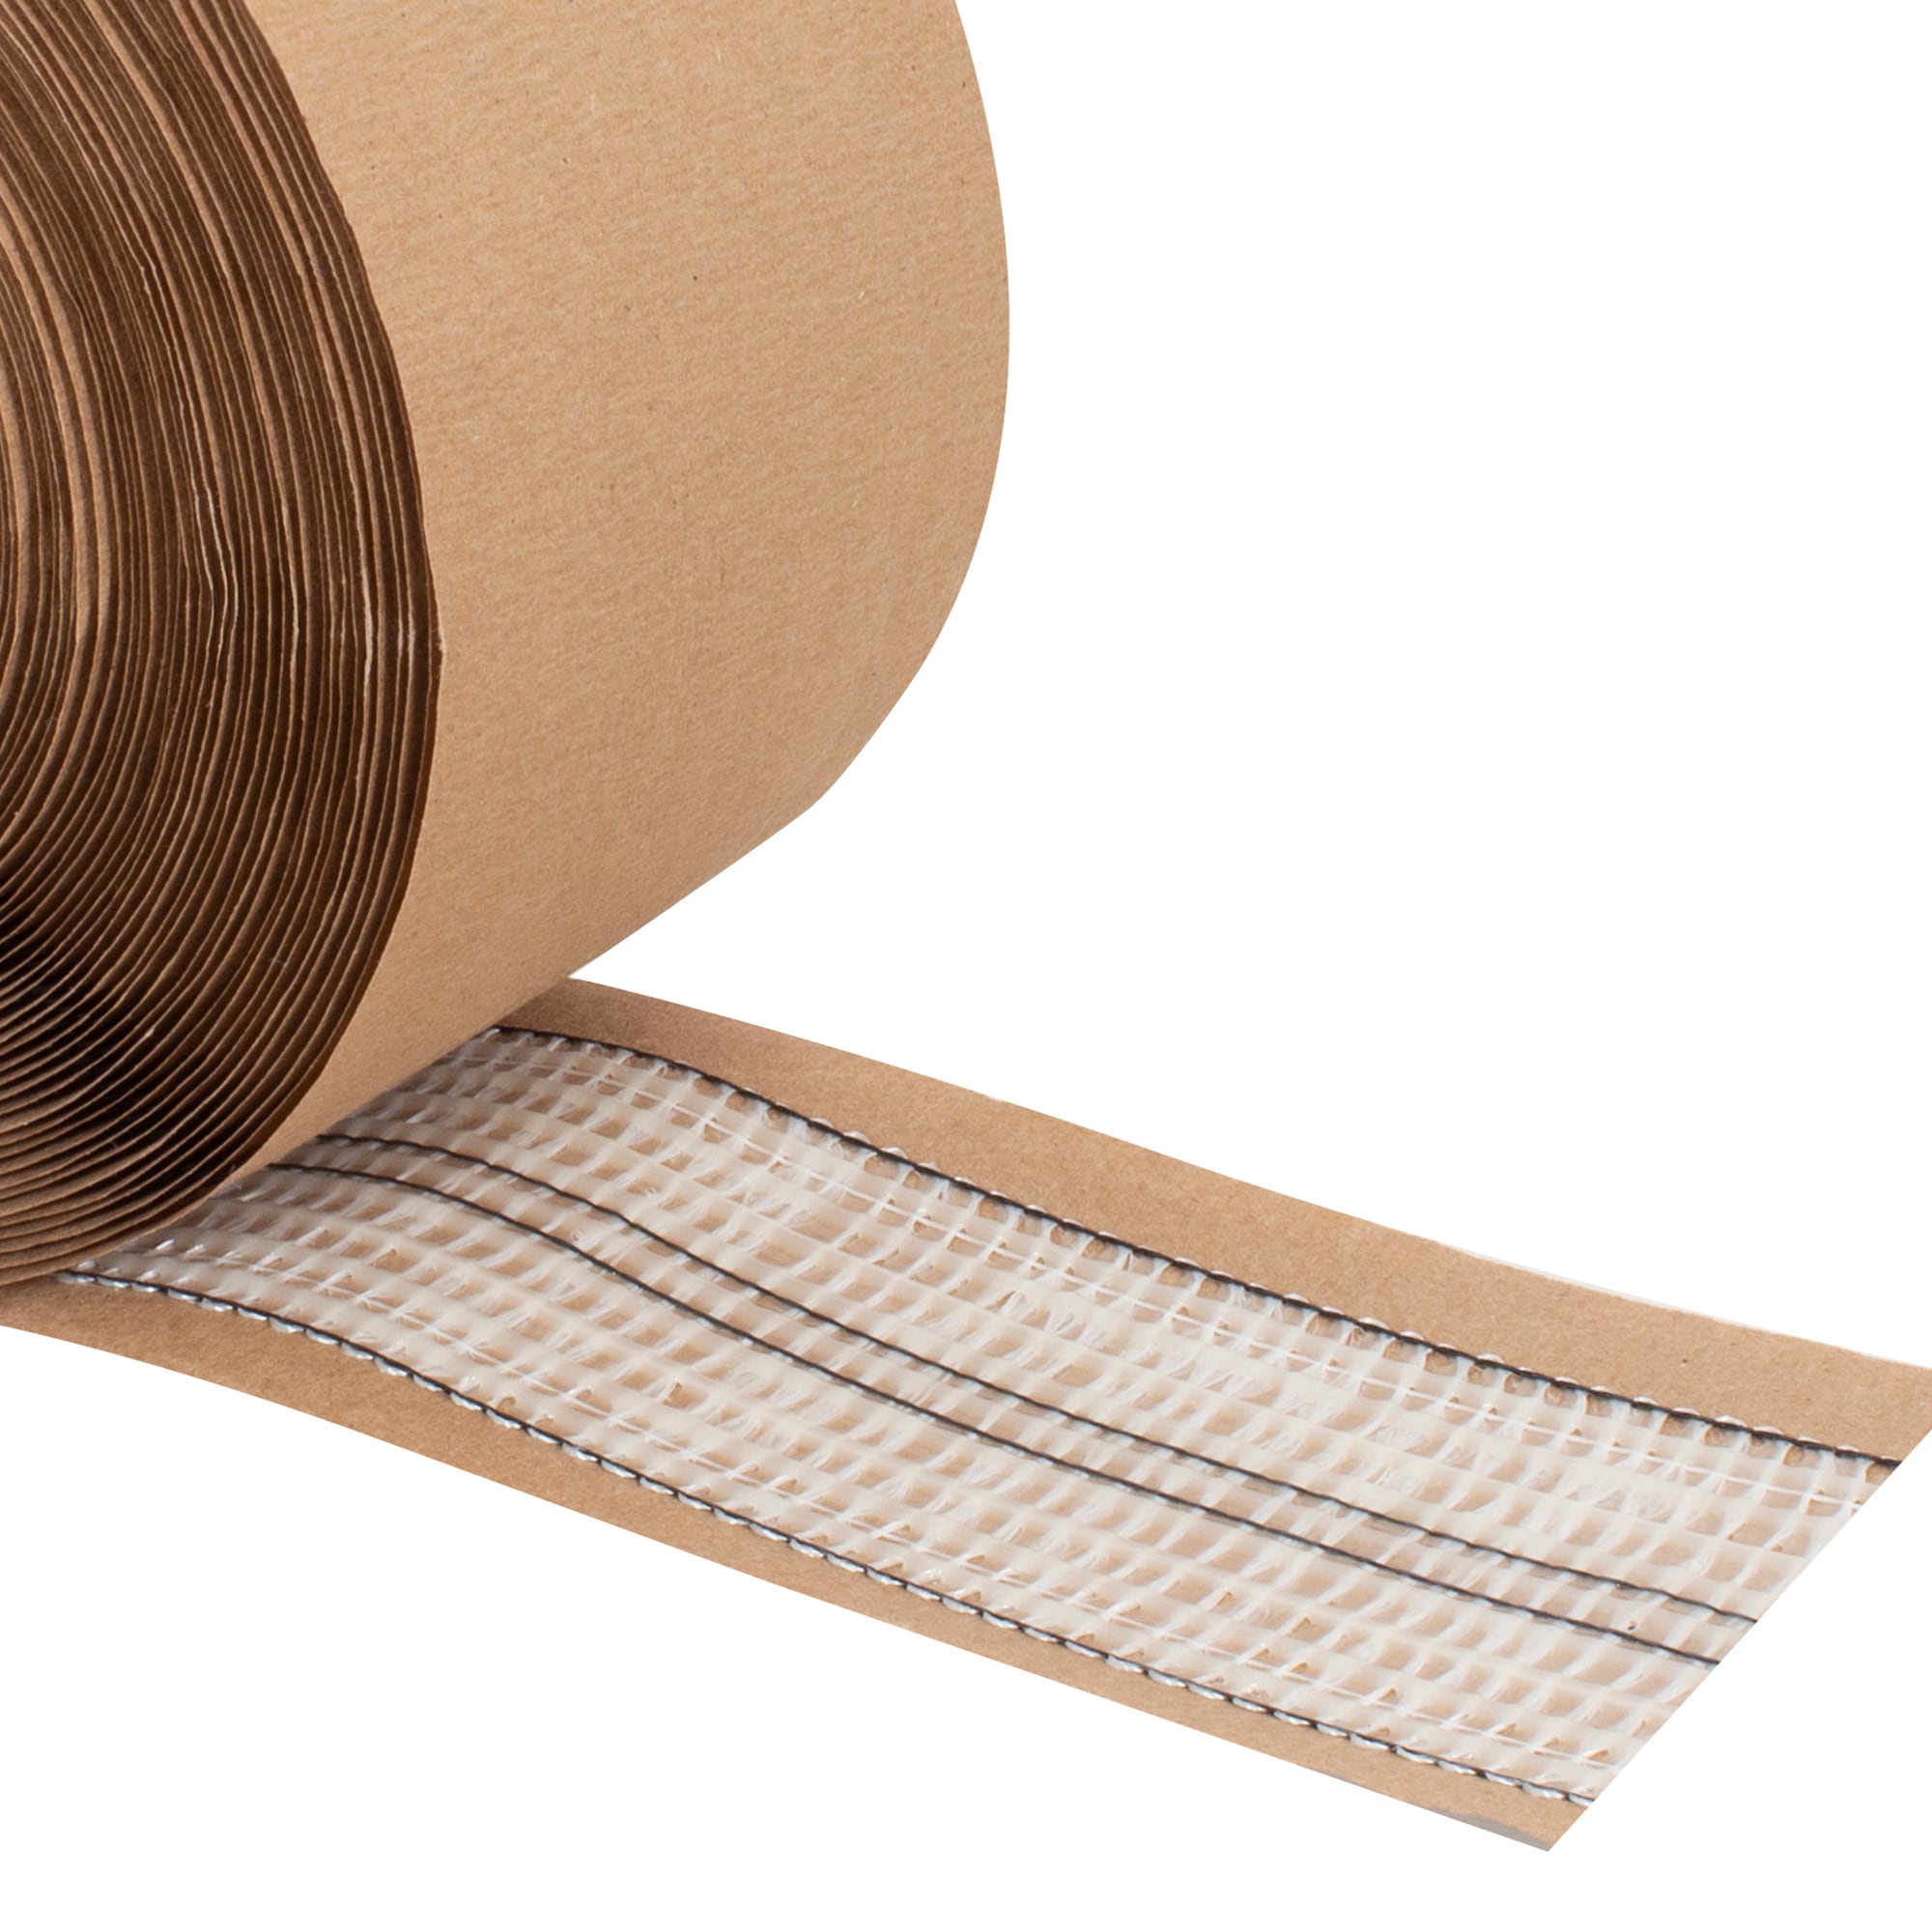 Traxx, Stixx Universal Carpet Seam Tape - Green Building Supply